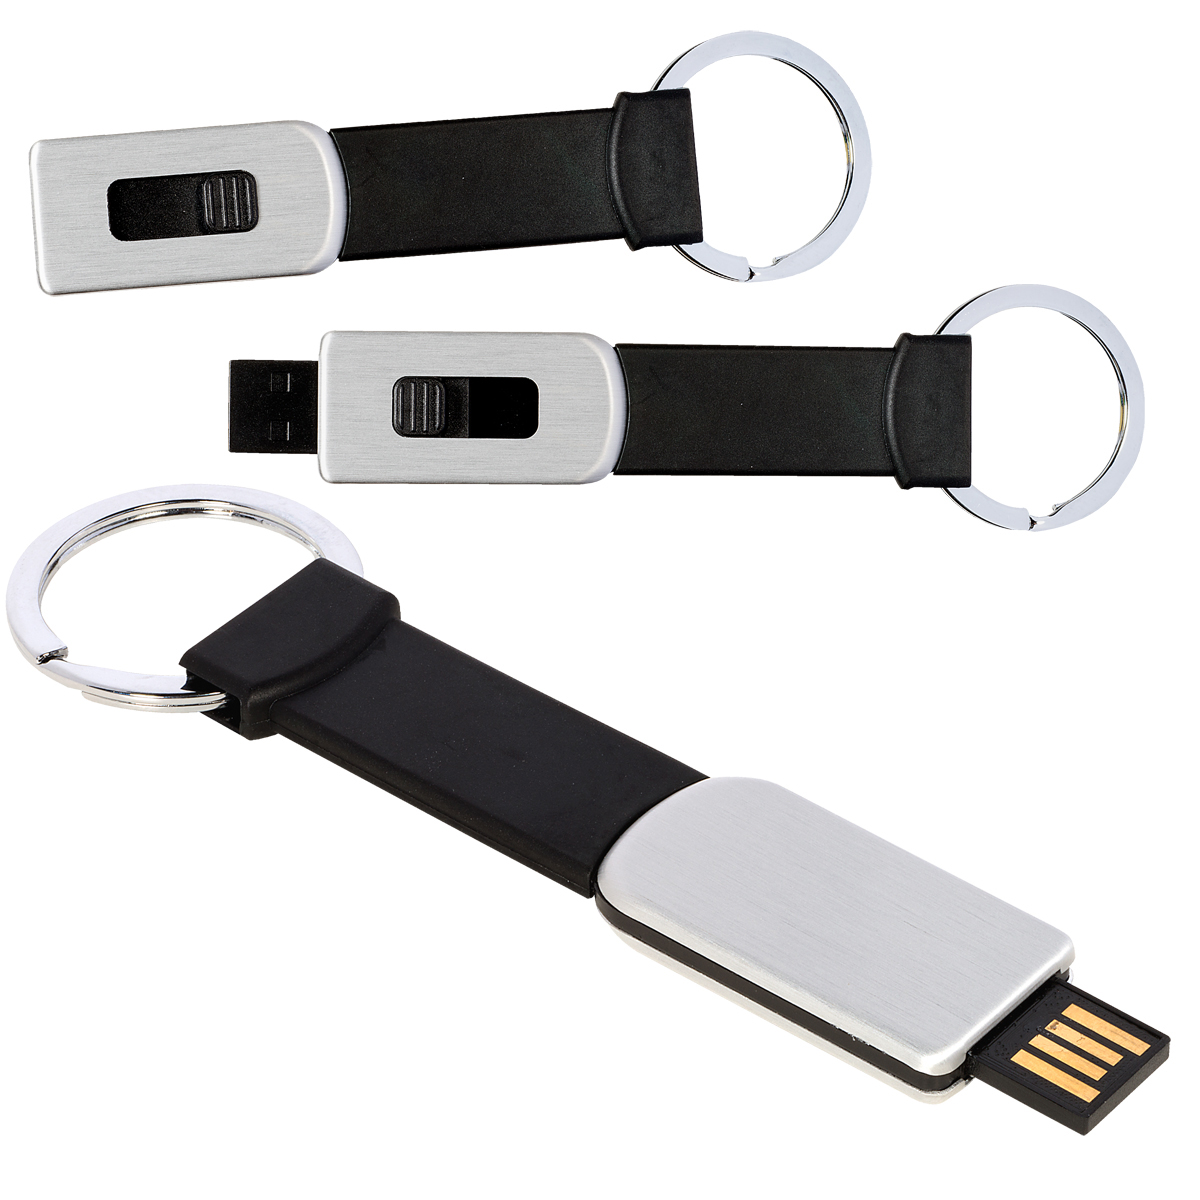 Key Chain USB Memory Flash Drive - 16GB